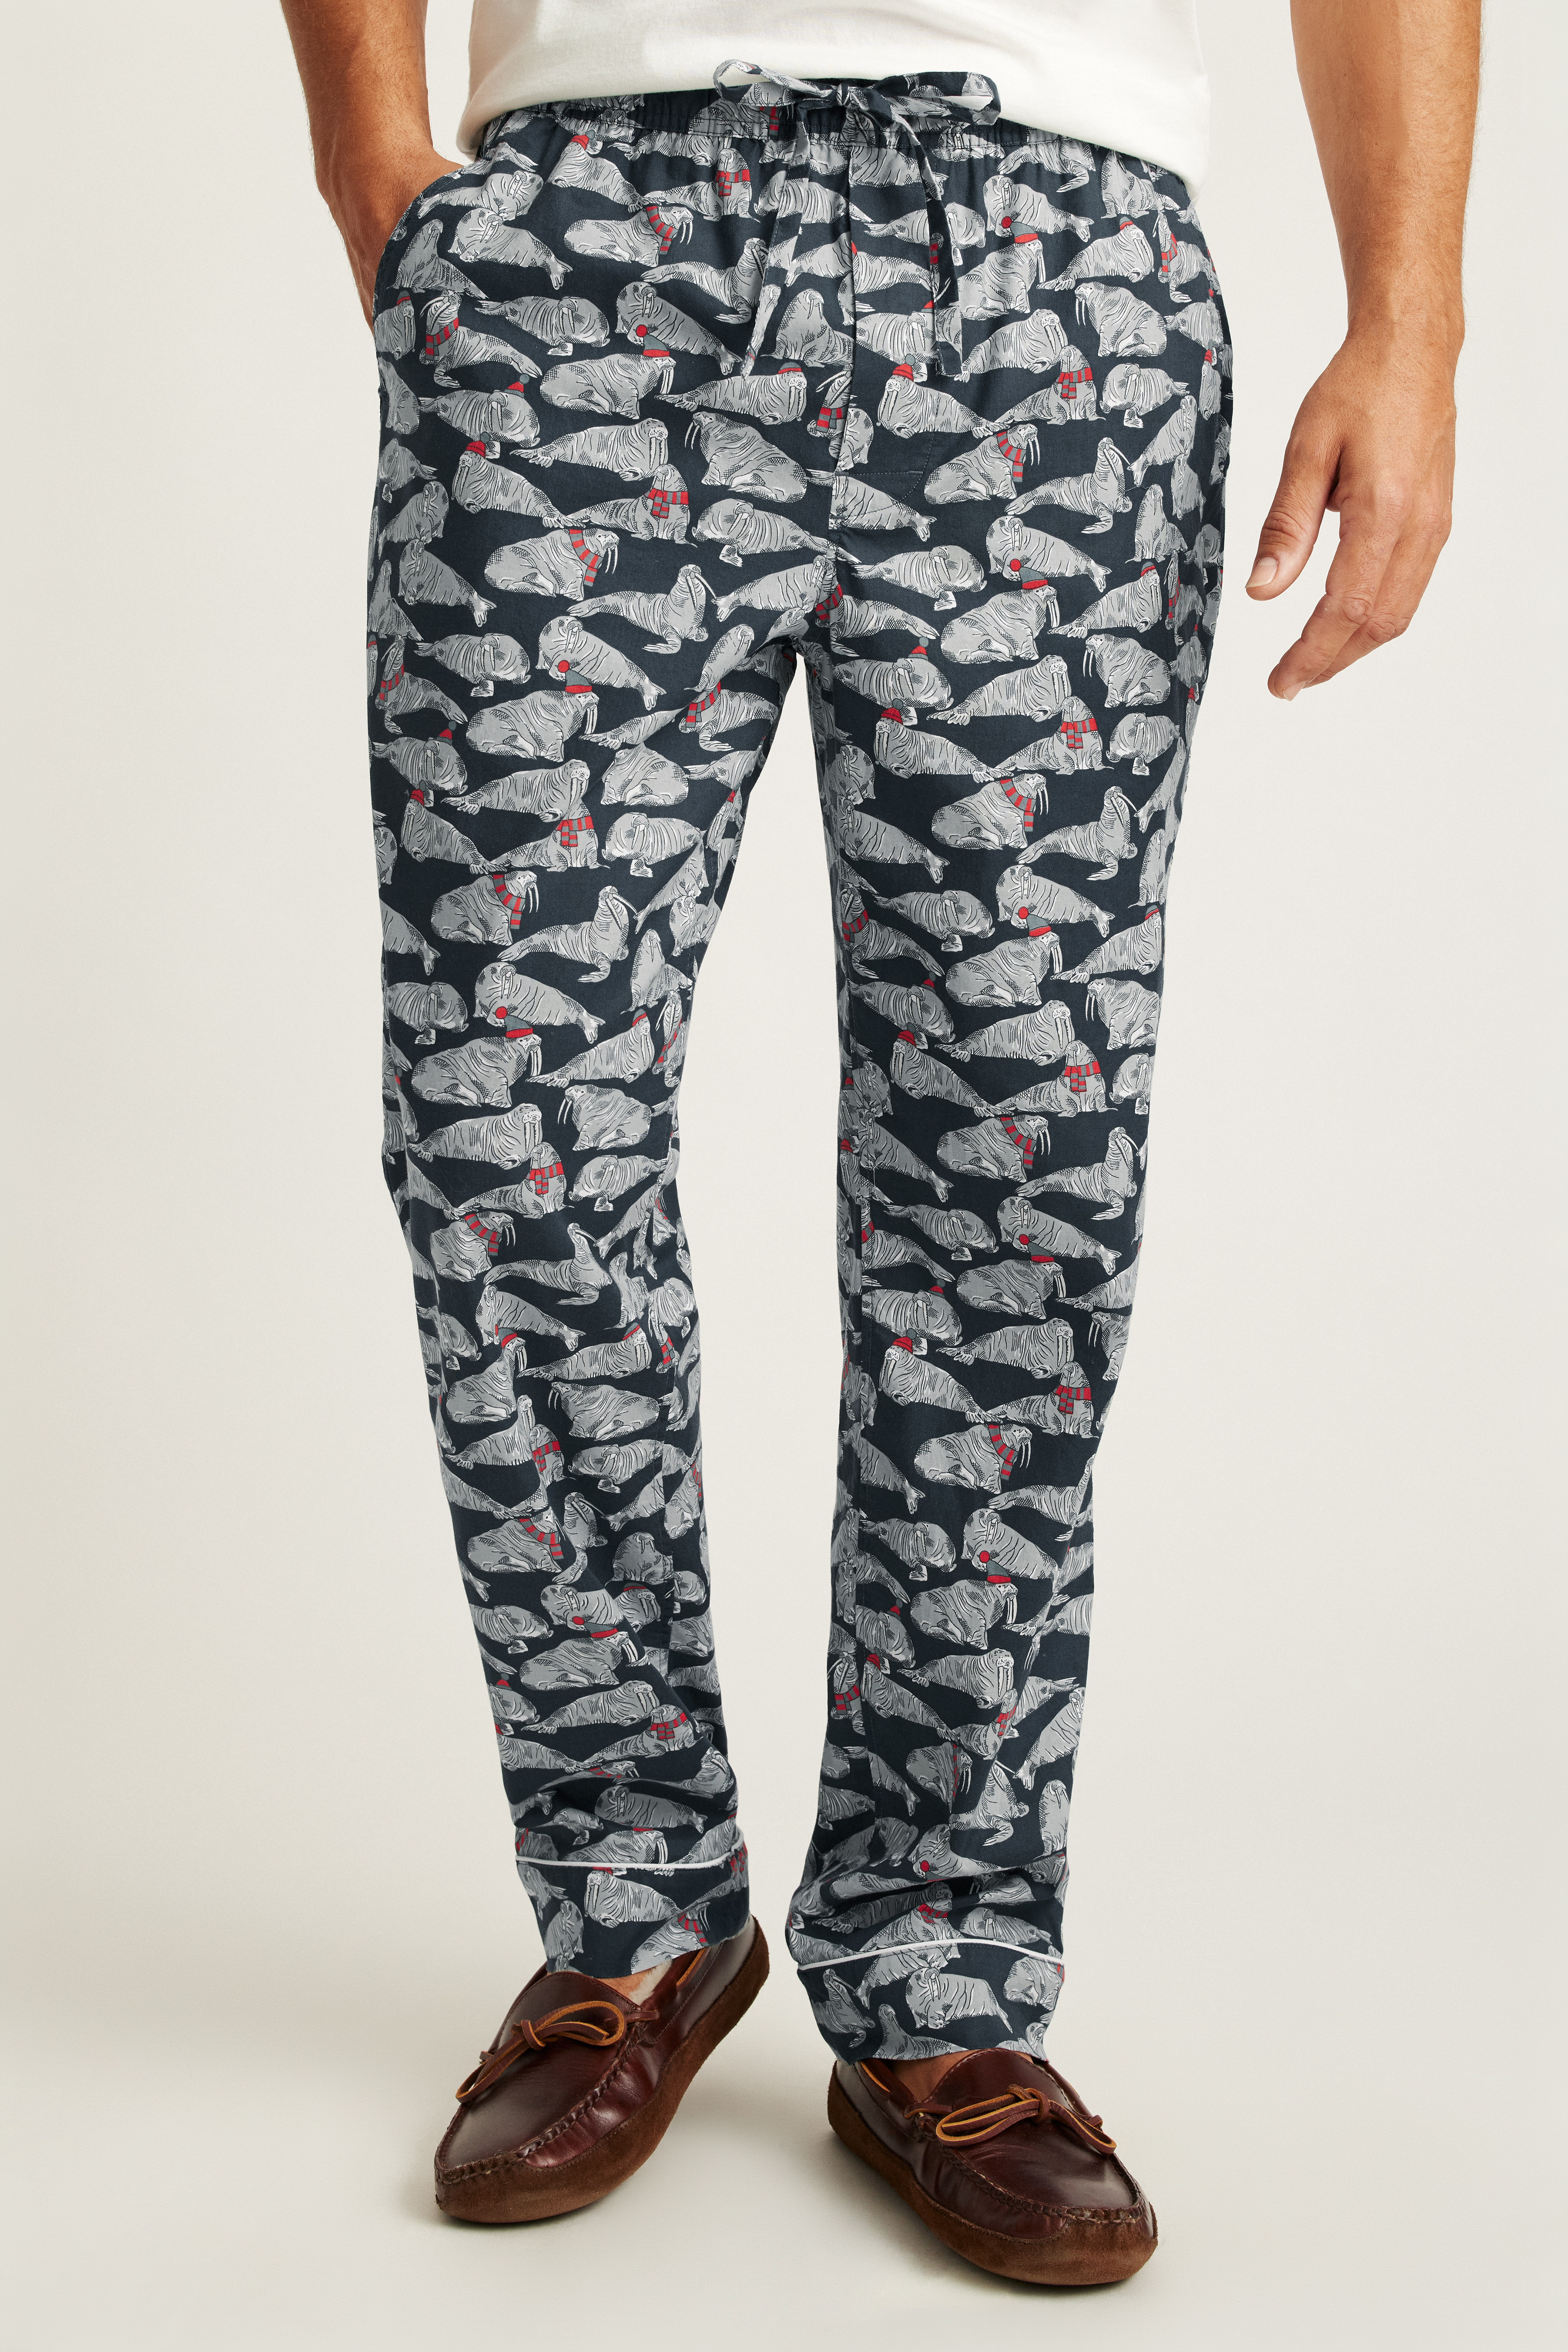 Critter Stretch Cotton Pajamas